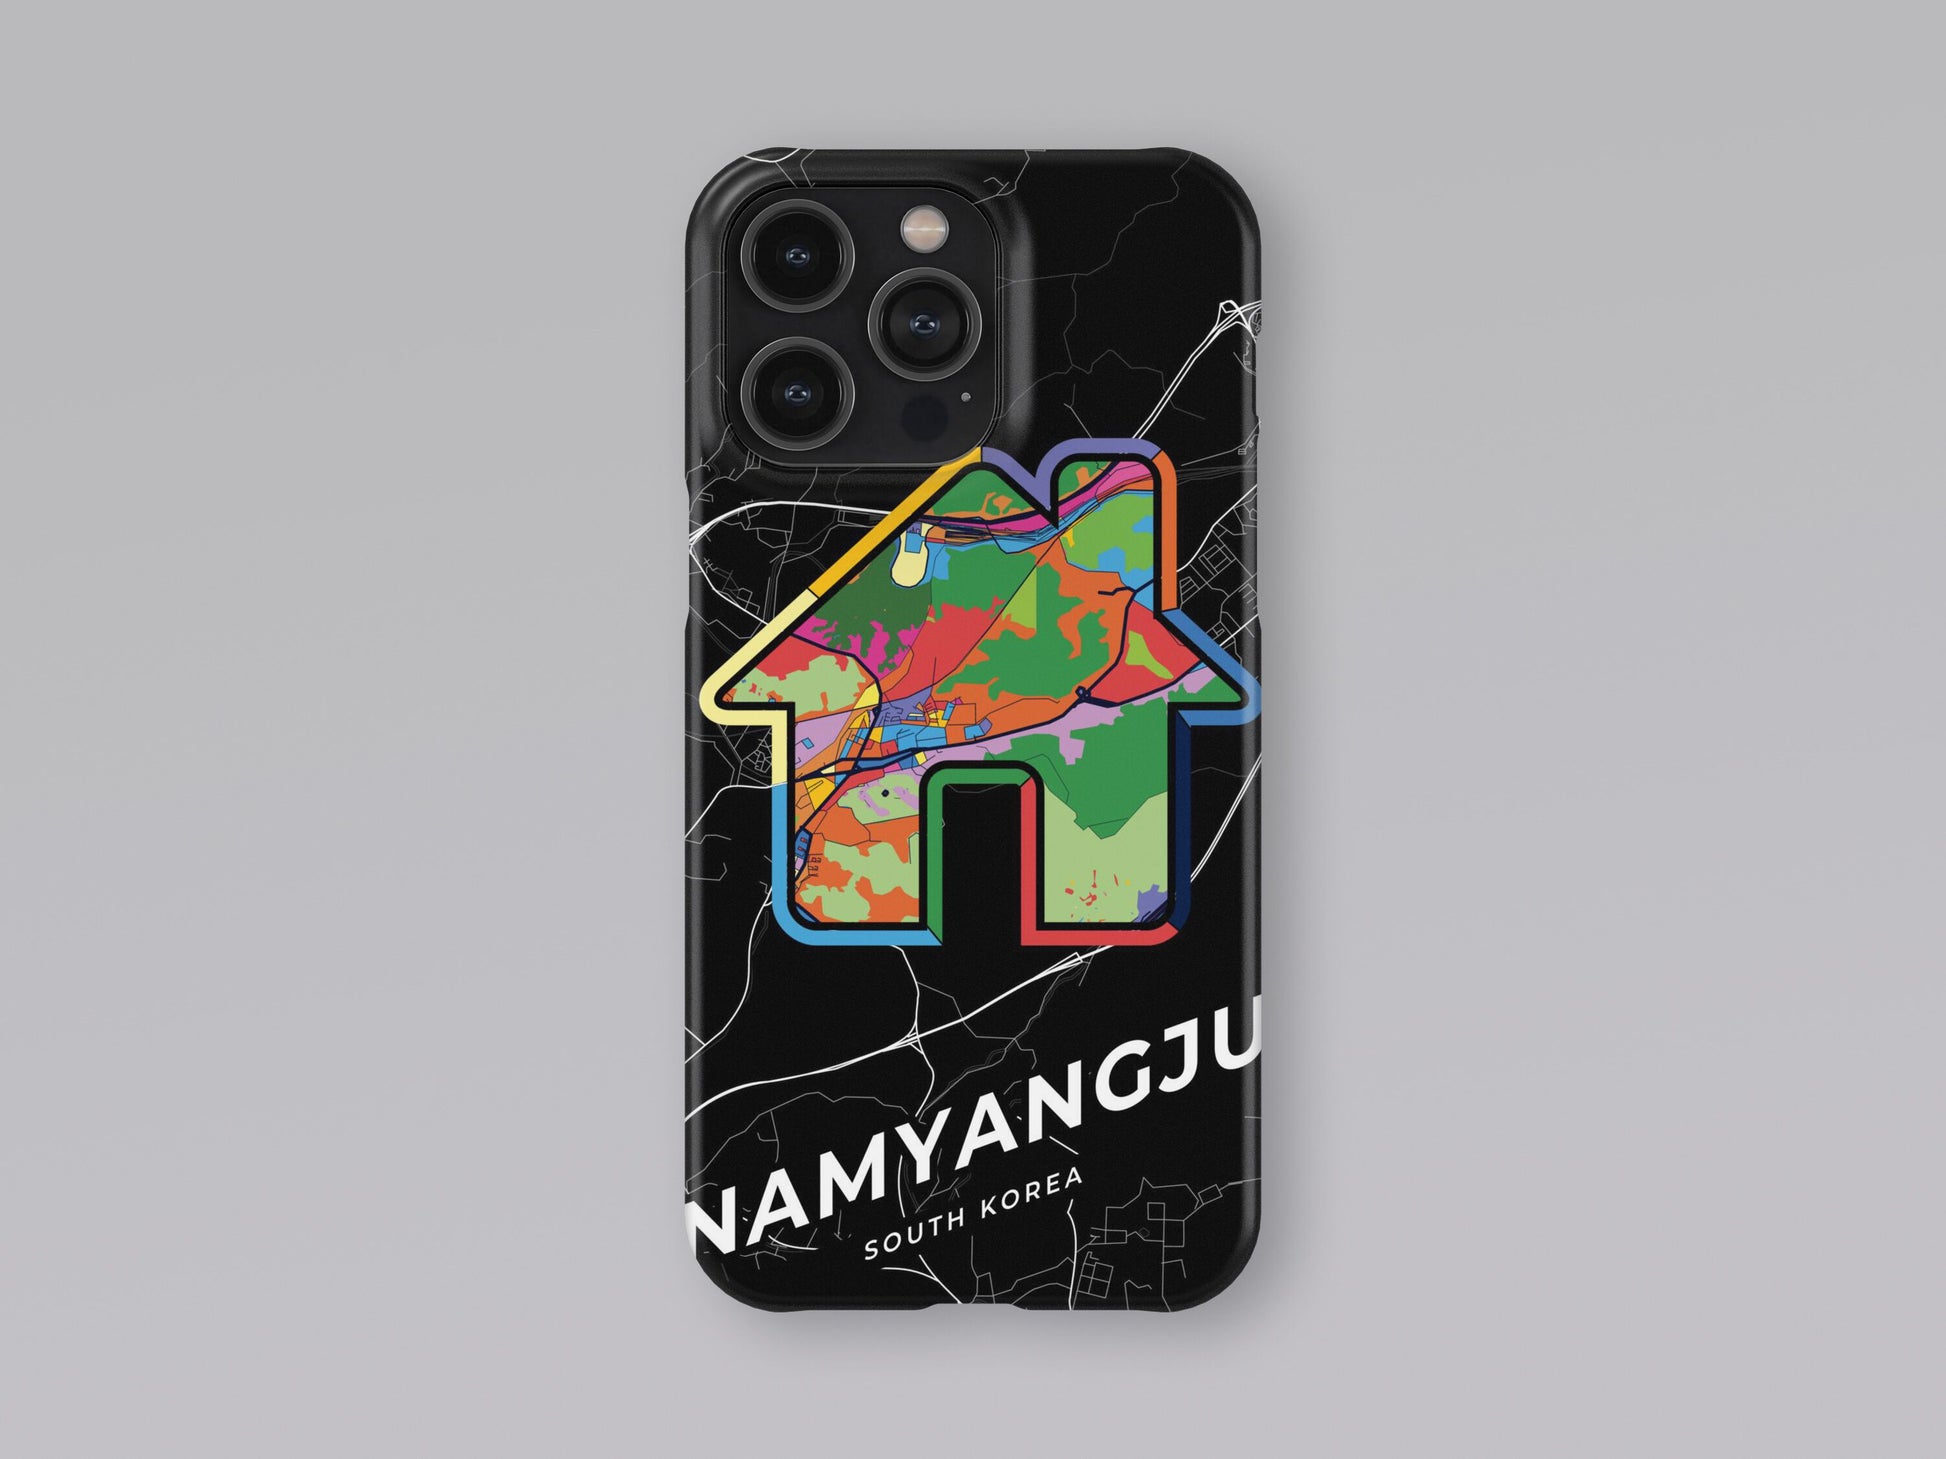 Namyangju South Korea slim phone case with colorful icon 3